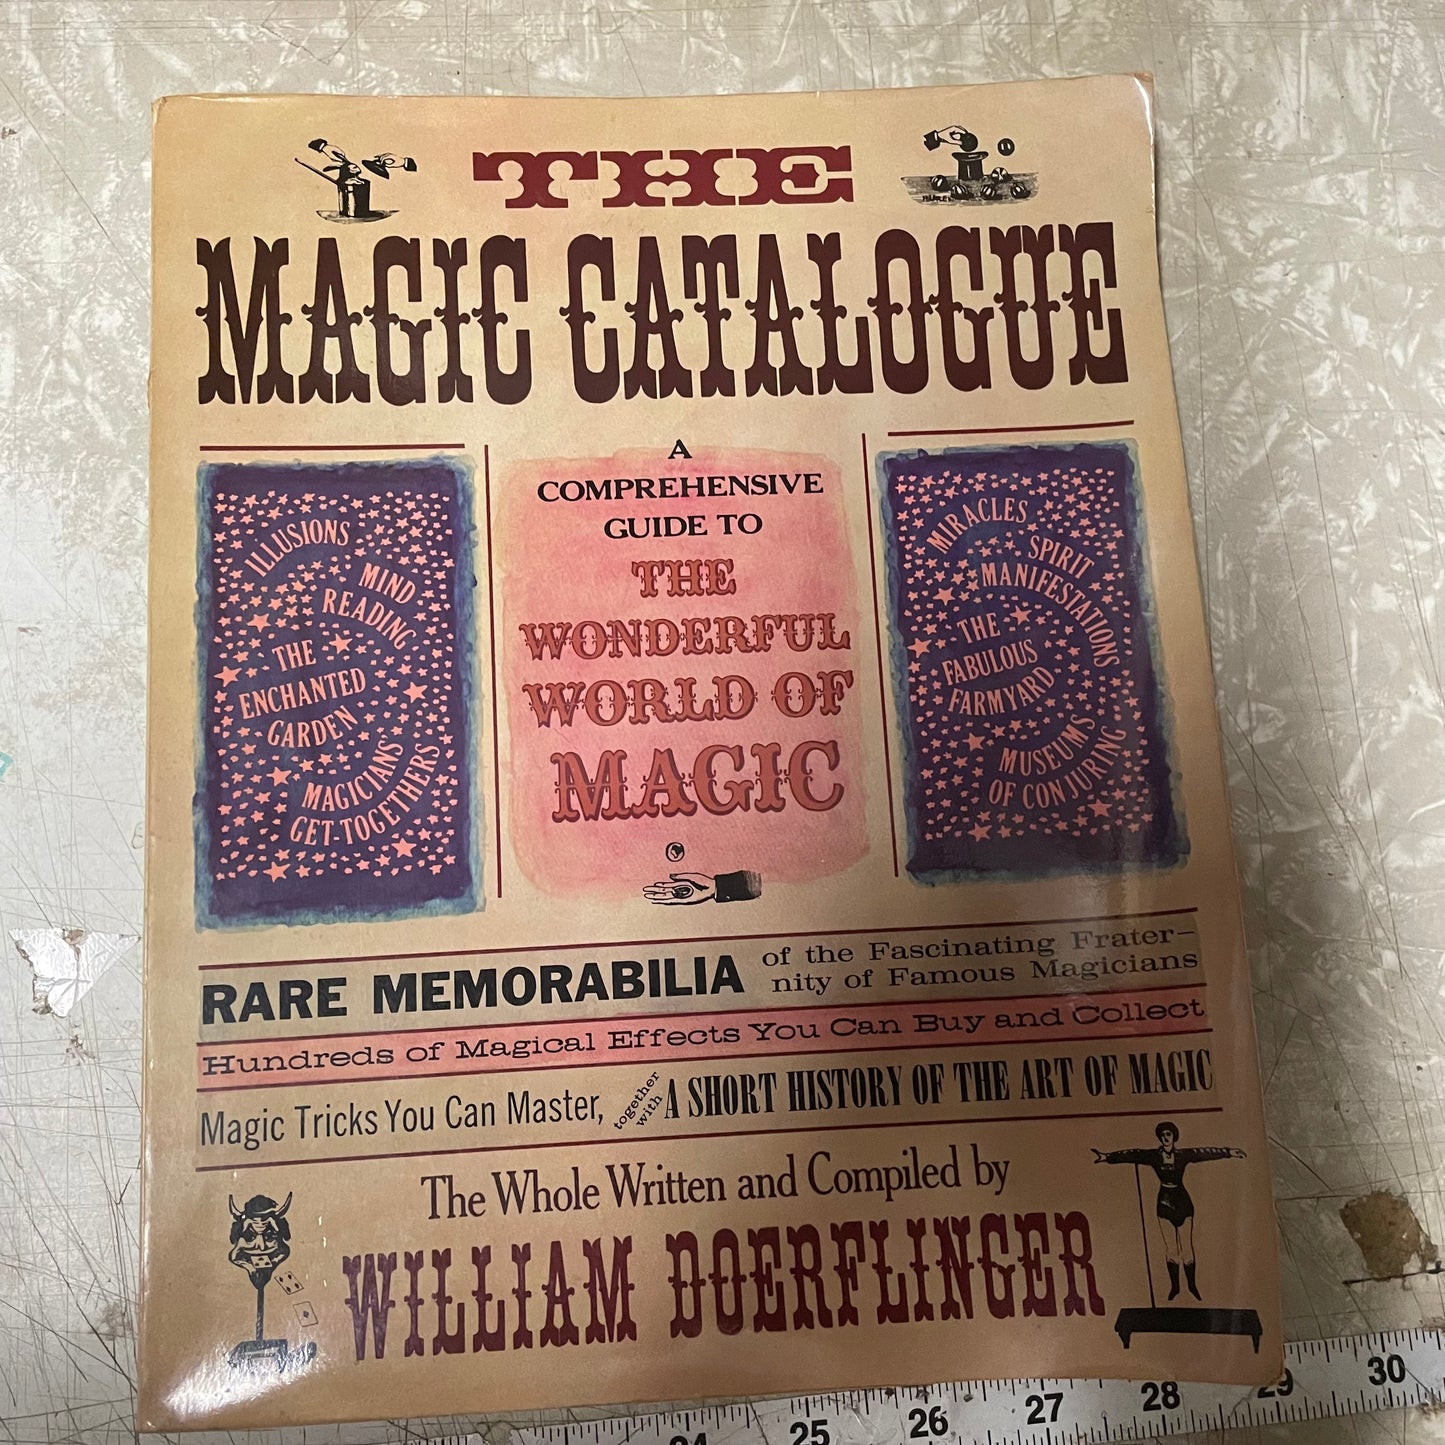 The Magic Catalog